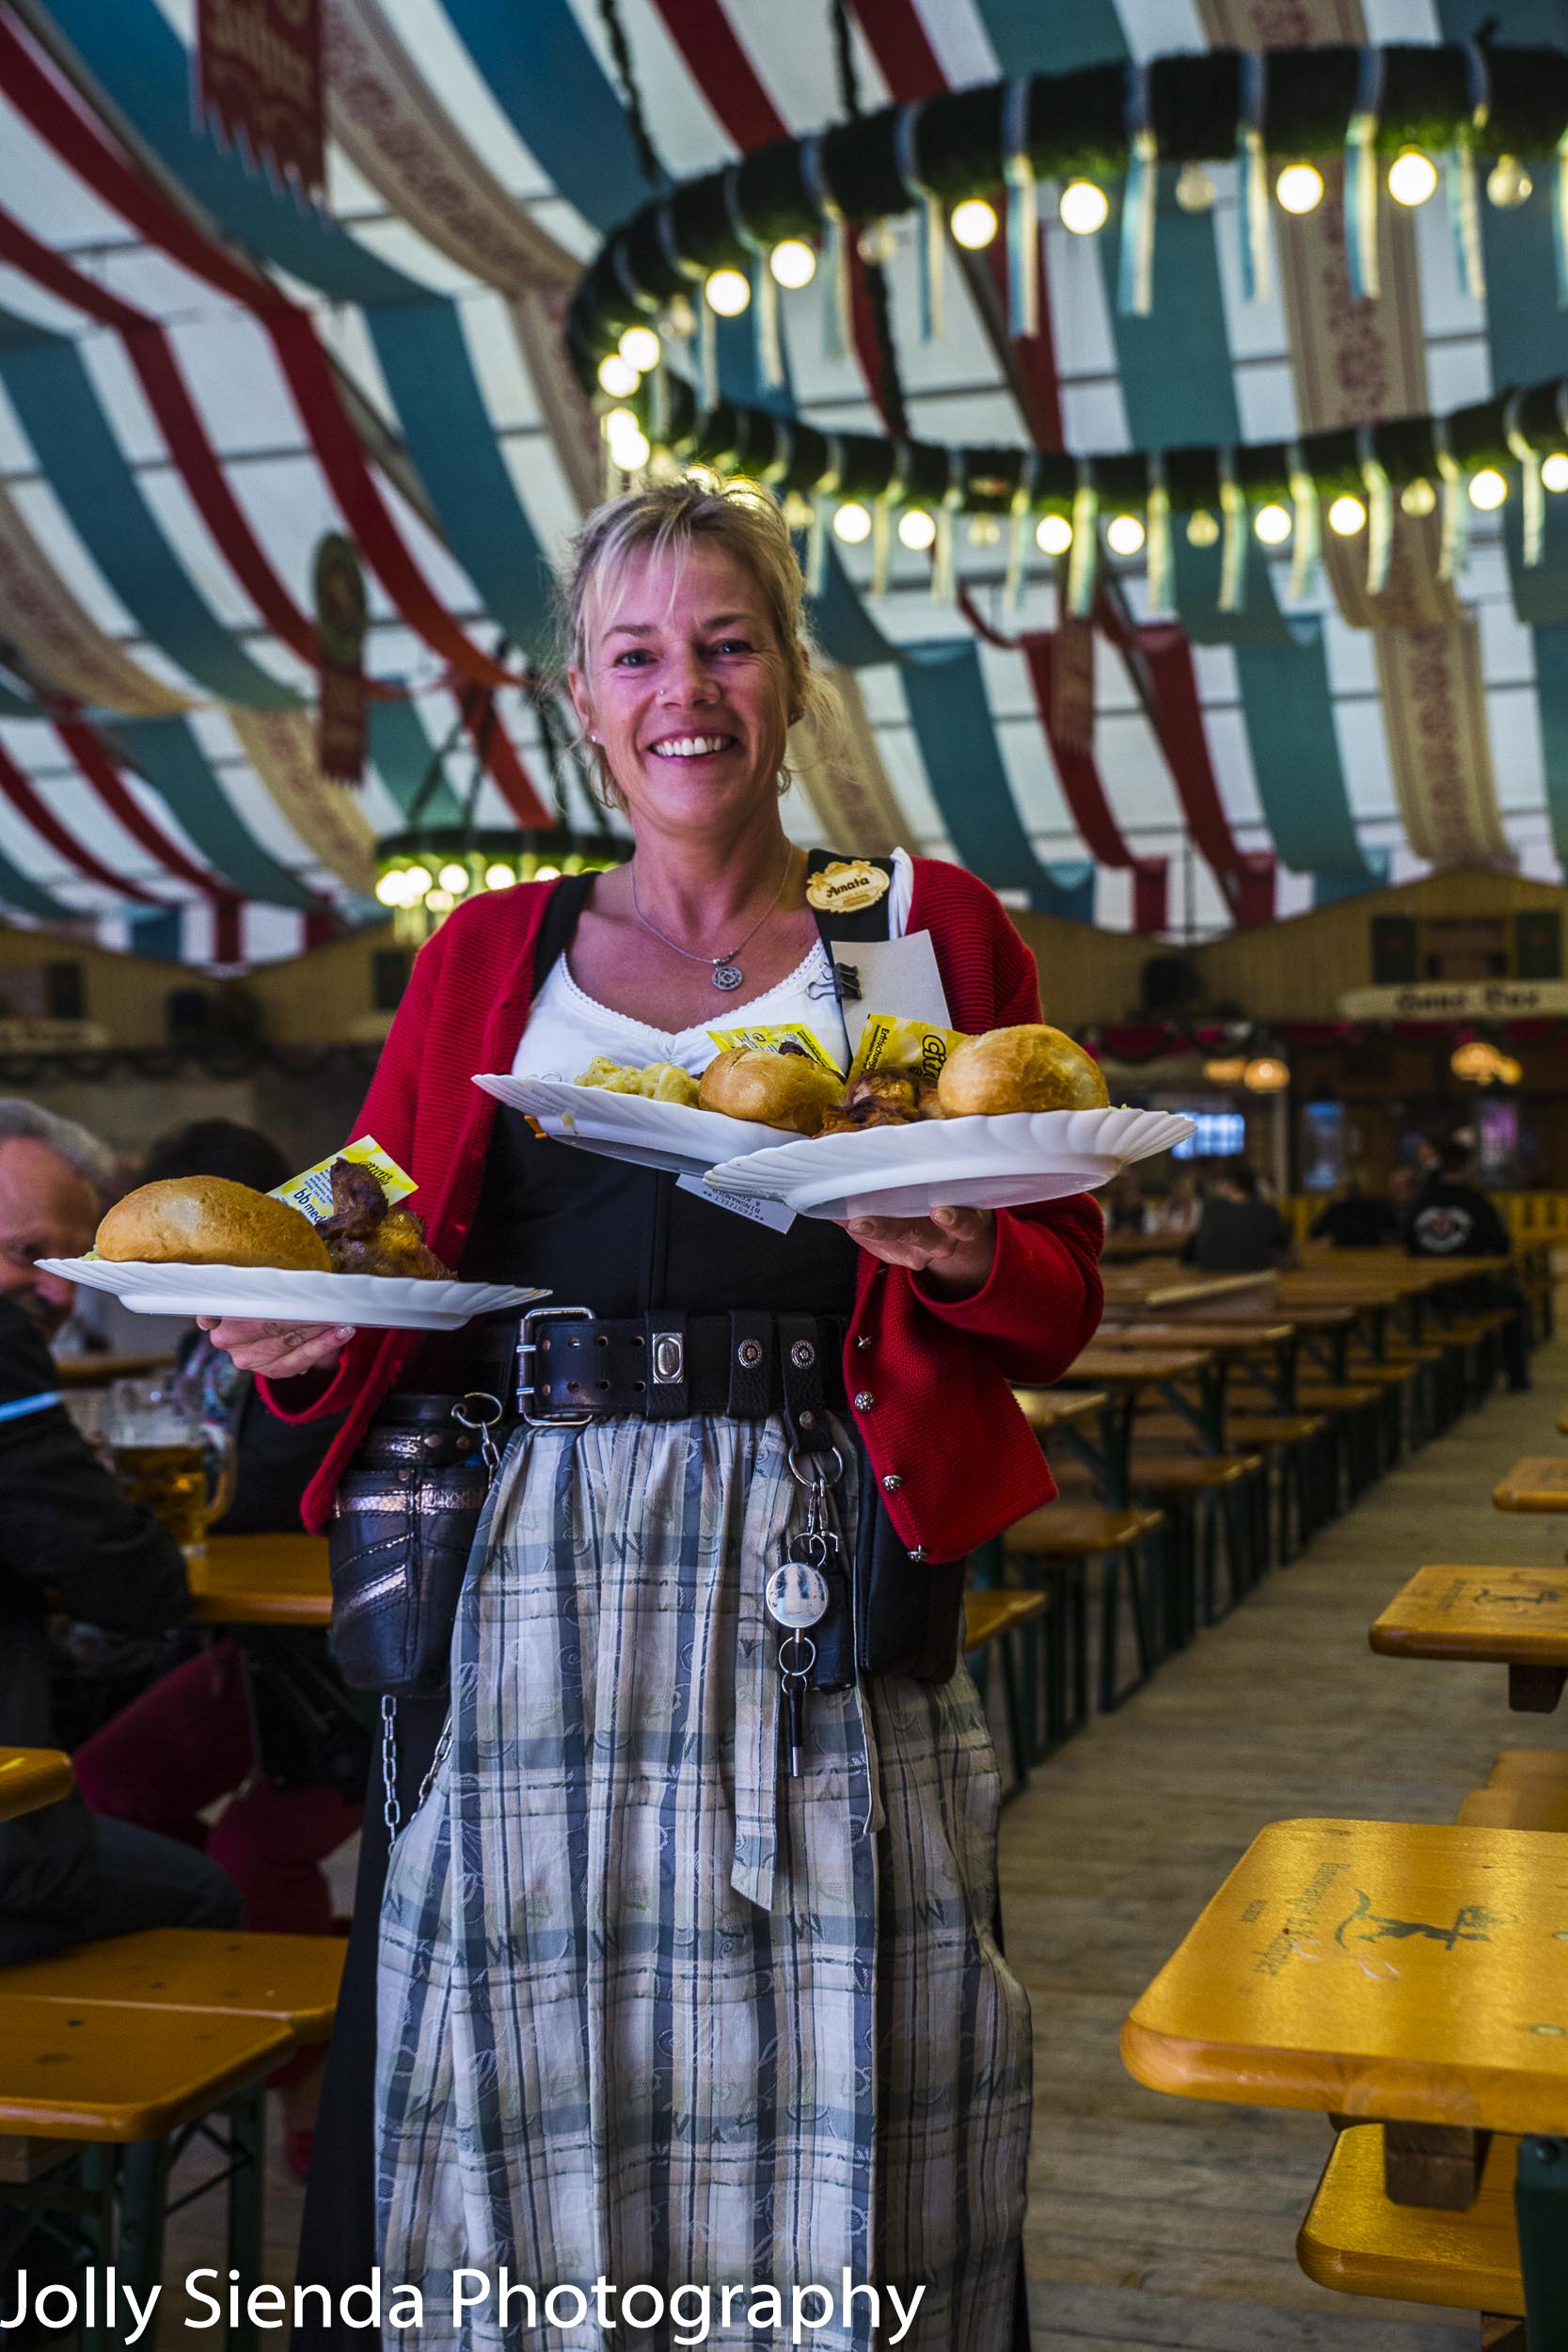 Fraulein waitress brings the schnitzel